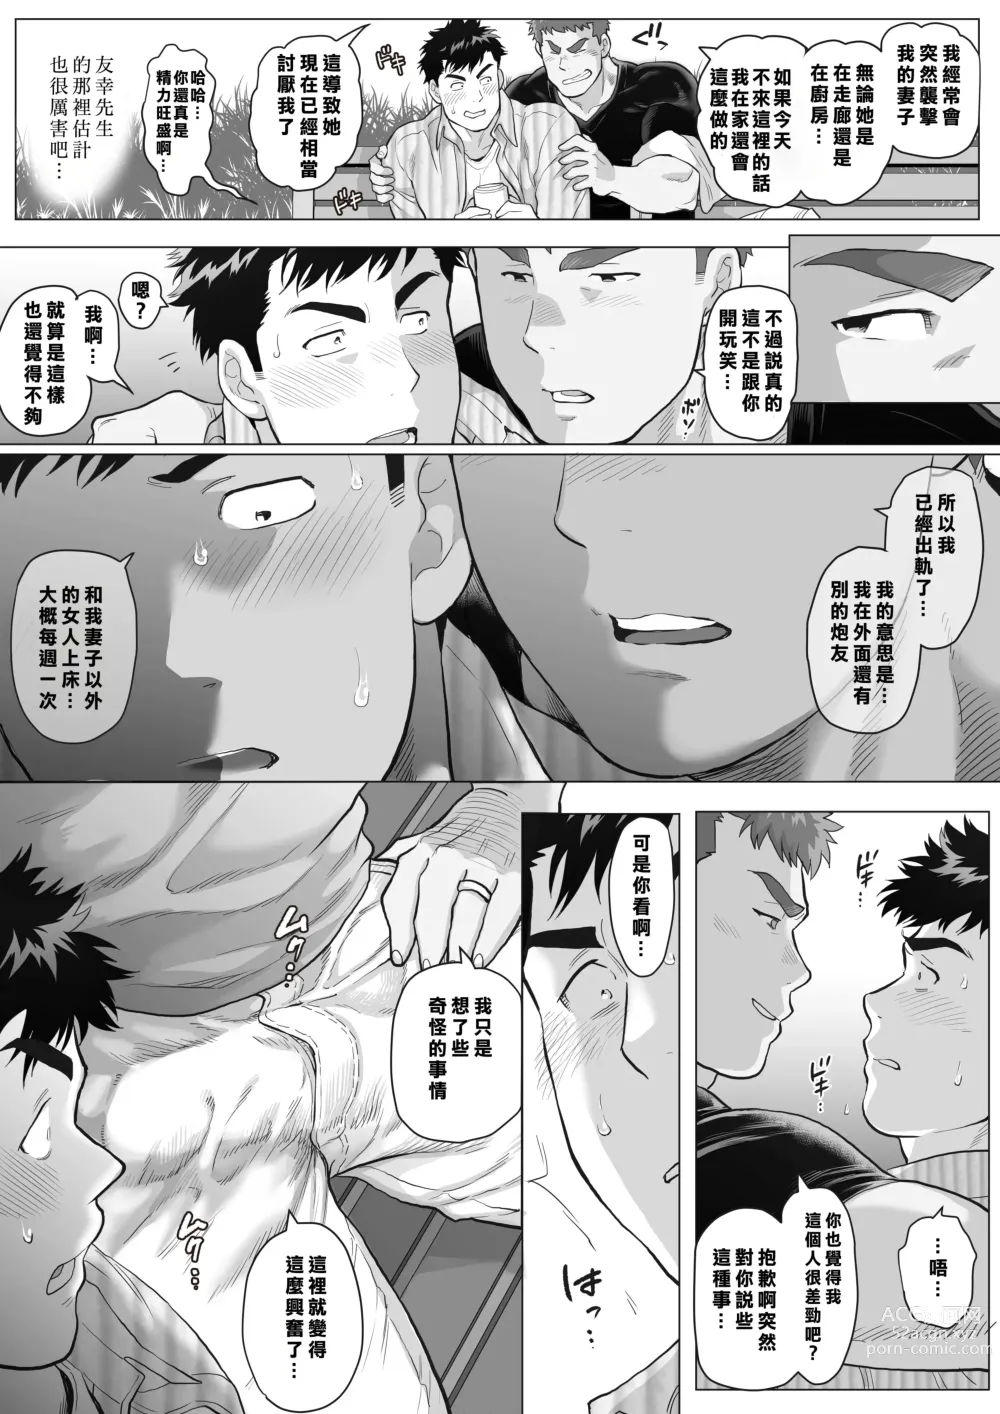 Page 9 of manga 直人爸爸与友幸爸爸 第一话